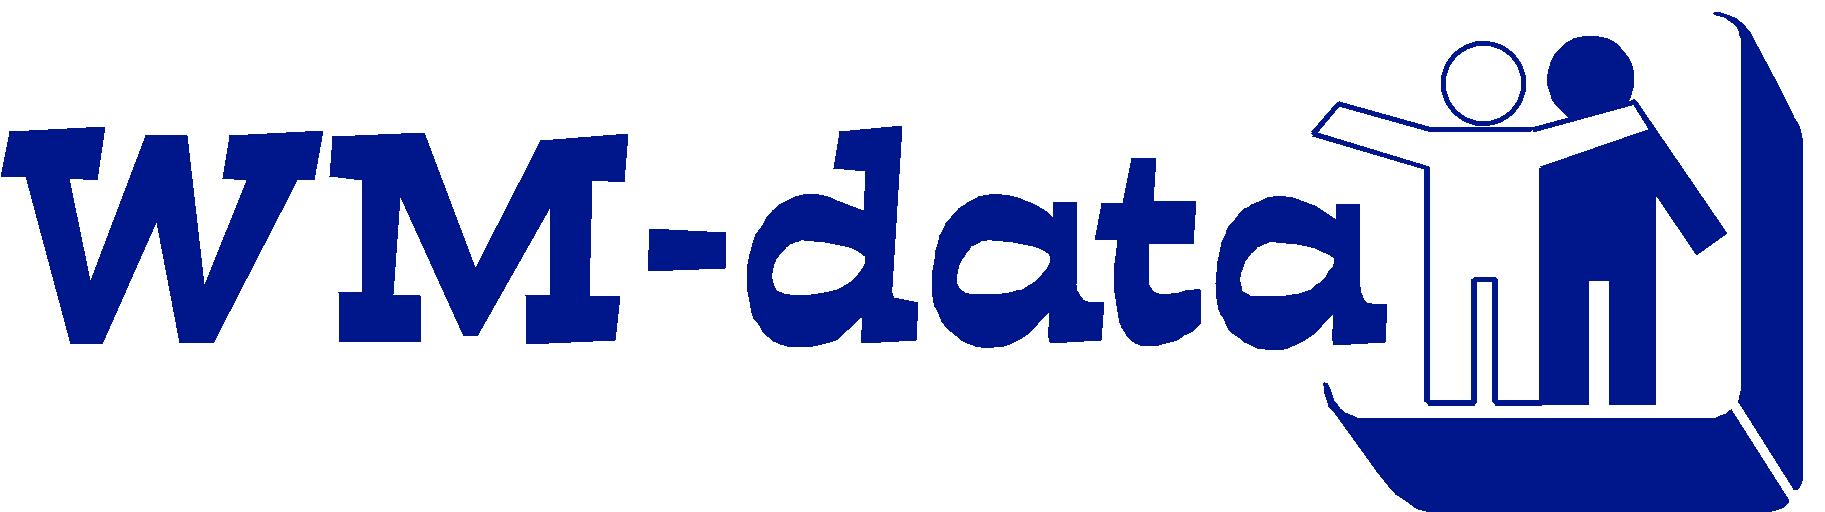 Dynamiq logo